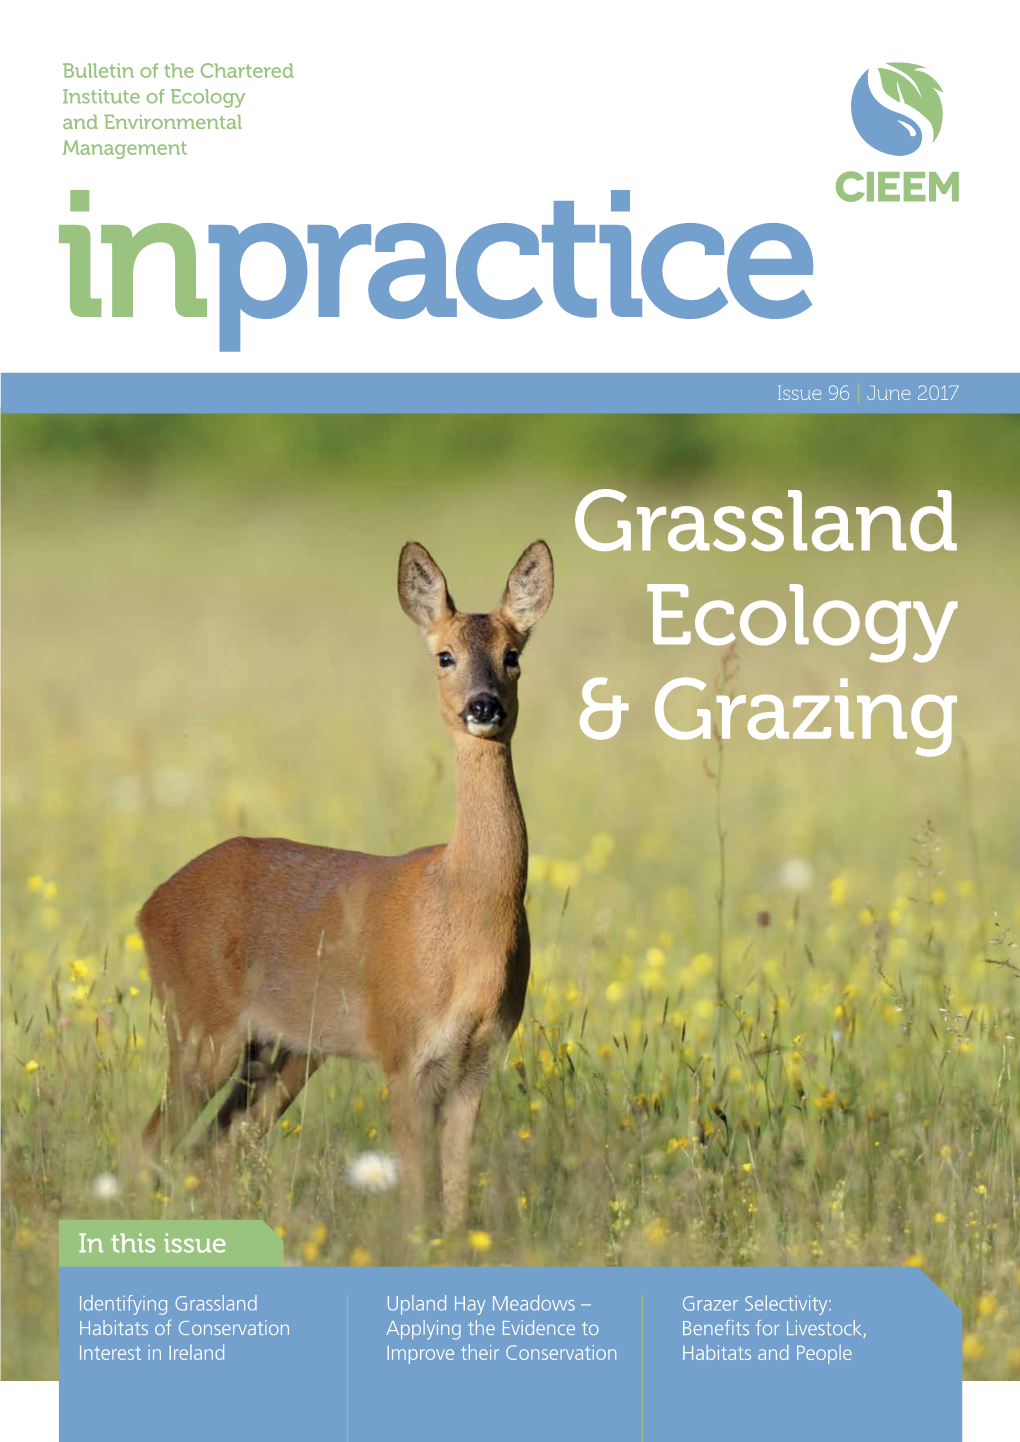 Grassland Ecology & Grazing